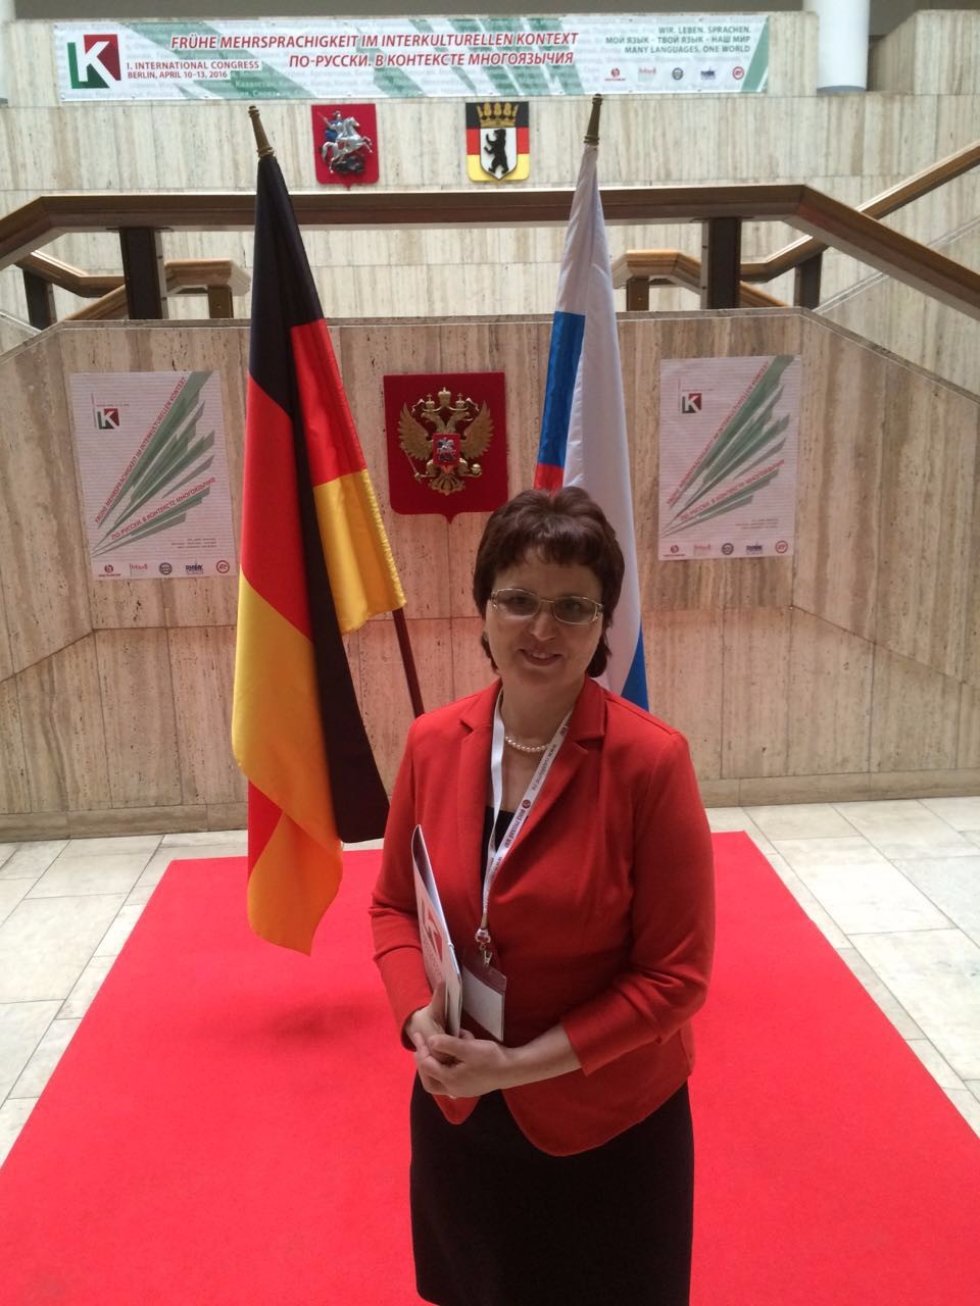 International congress on multilingualism held in Berlin ,International congress on multilingualism held in Berlin